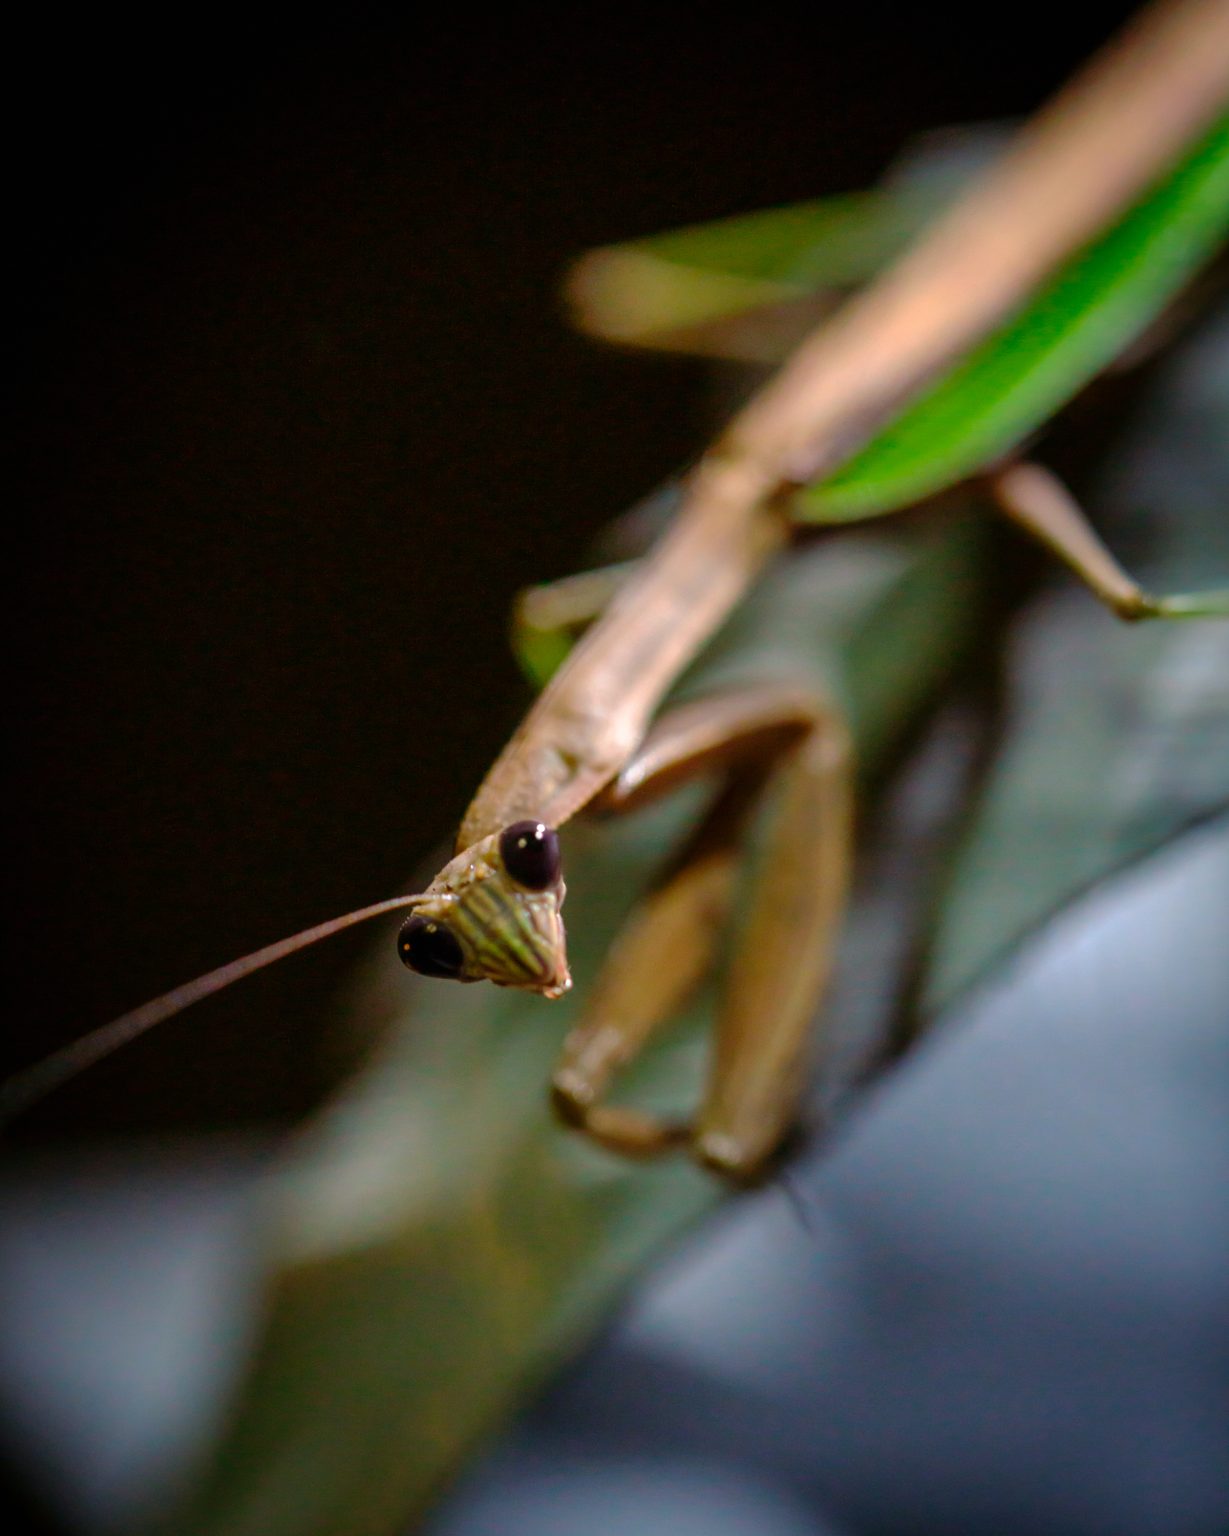 Green praying mantis staring at the camera. Photo contributed by Nicholas Garofalo to the WordPress Photo Directory.